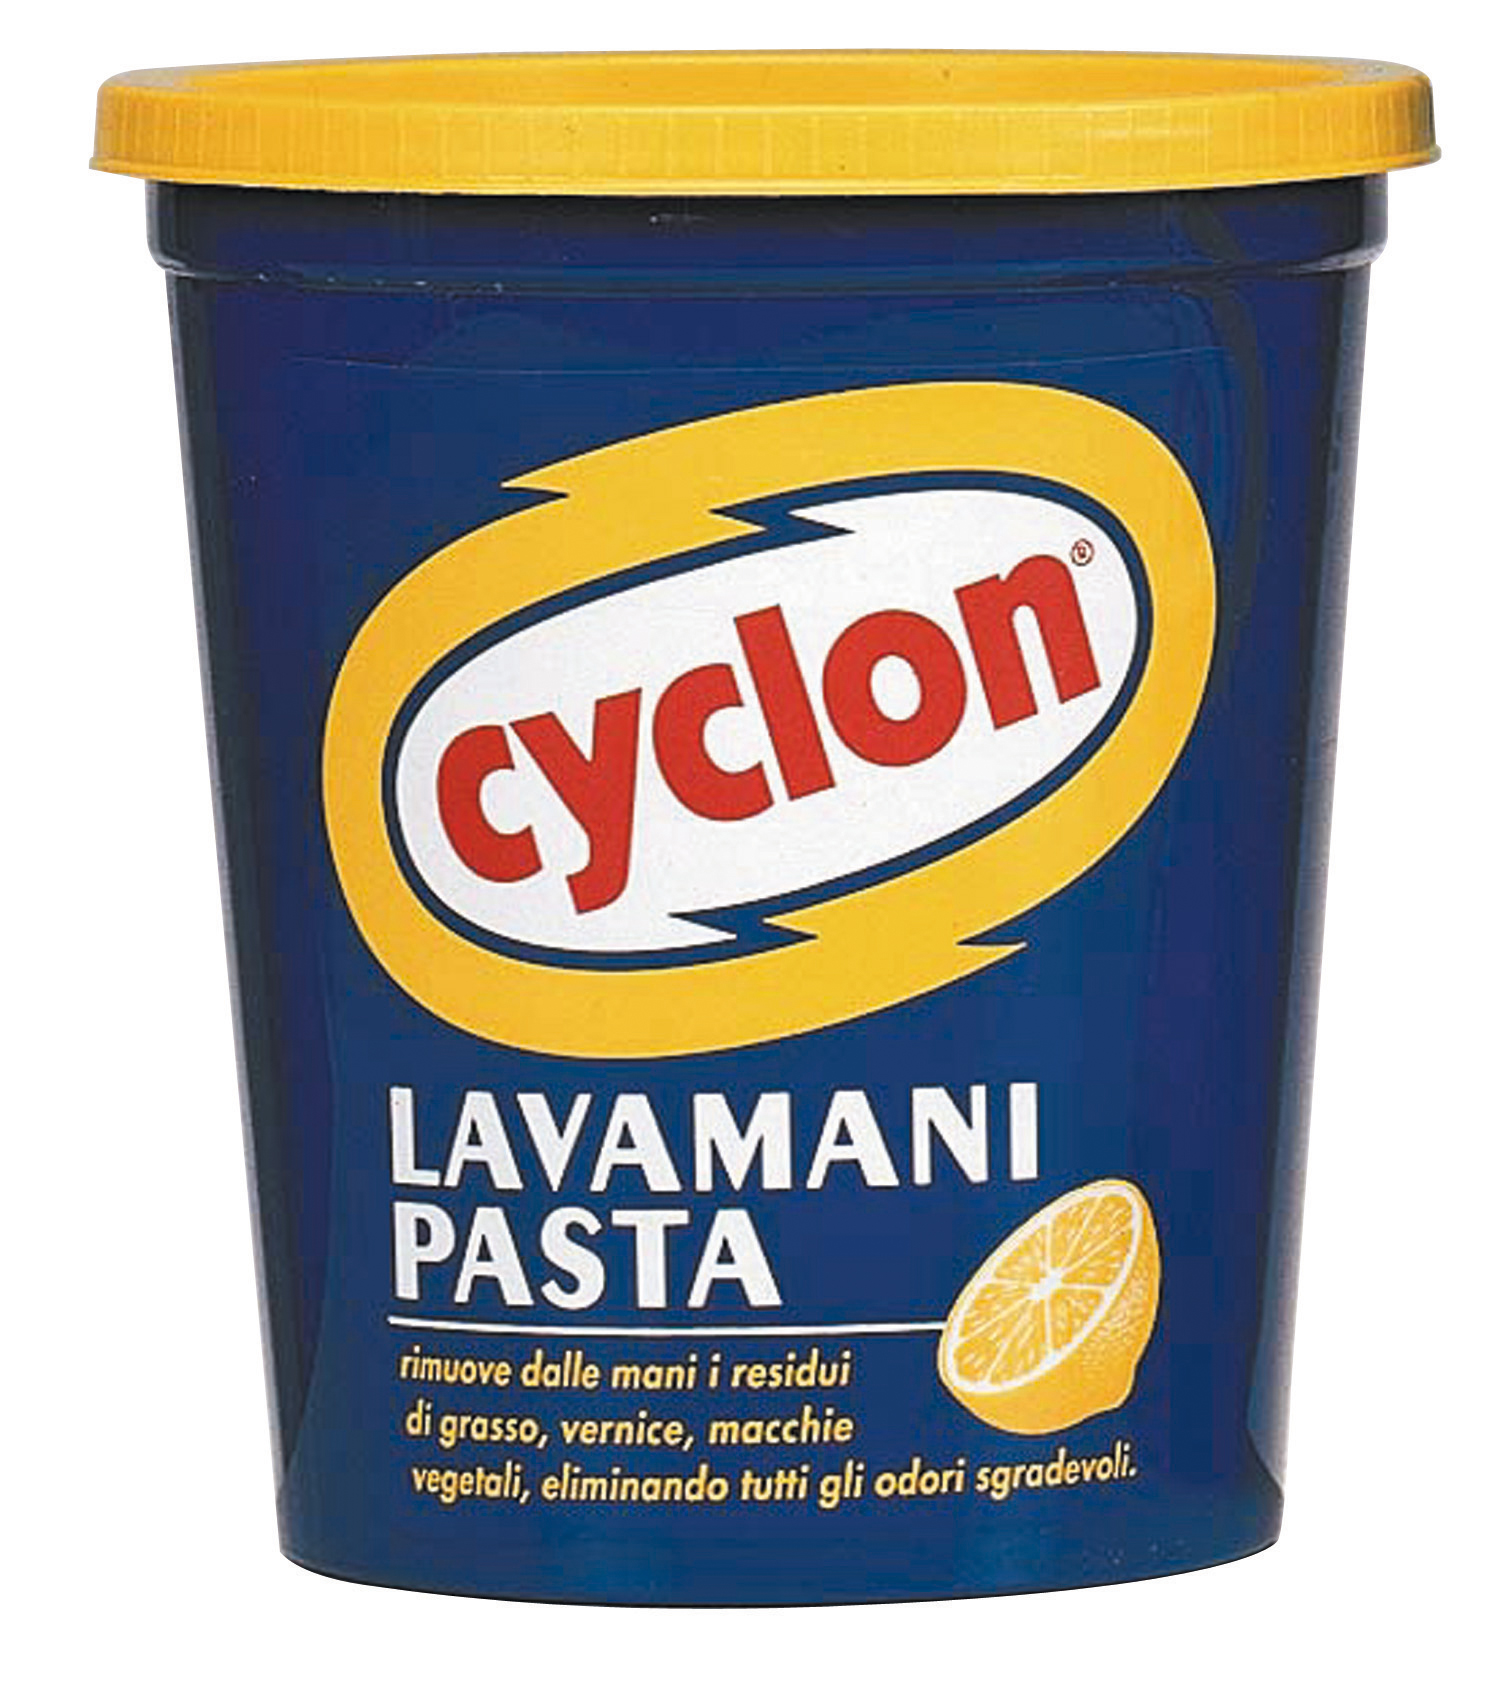 Cyclon Pasta Limone 1000g M76019 8002150020107